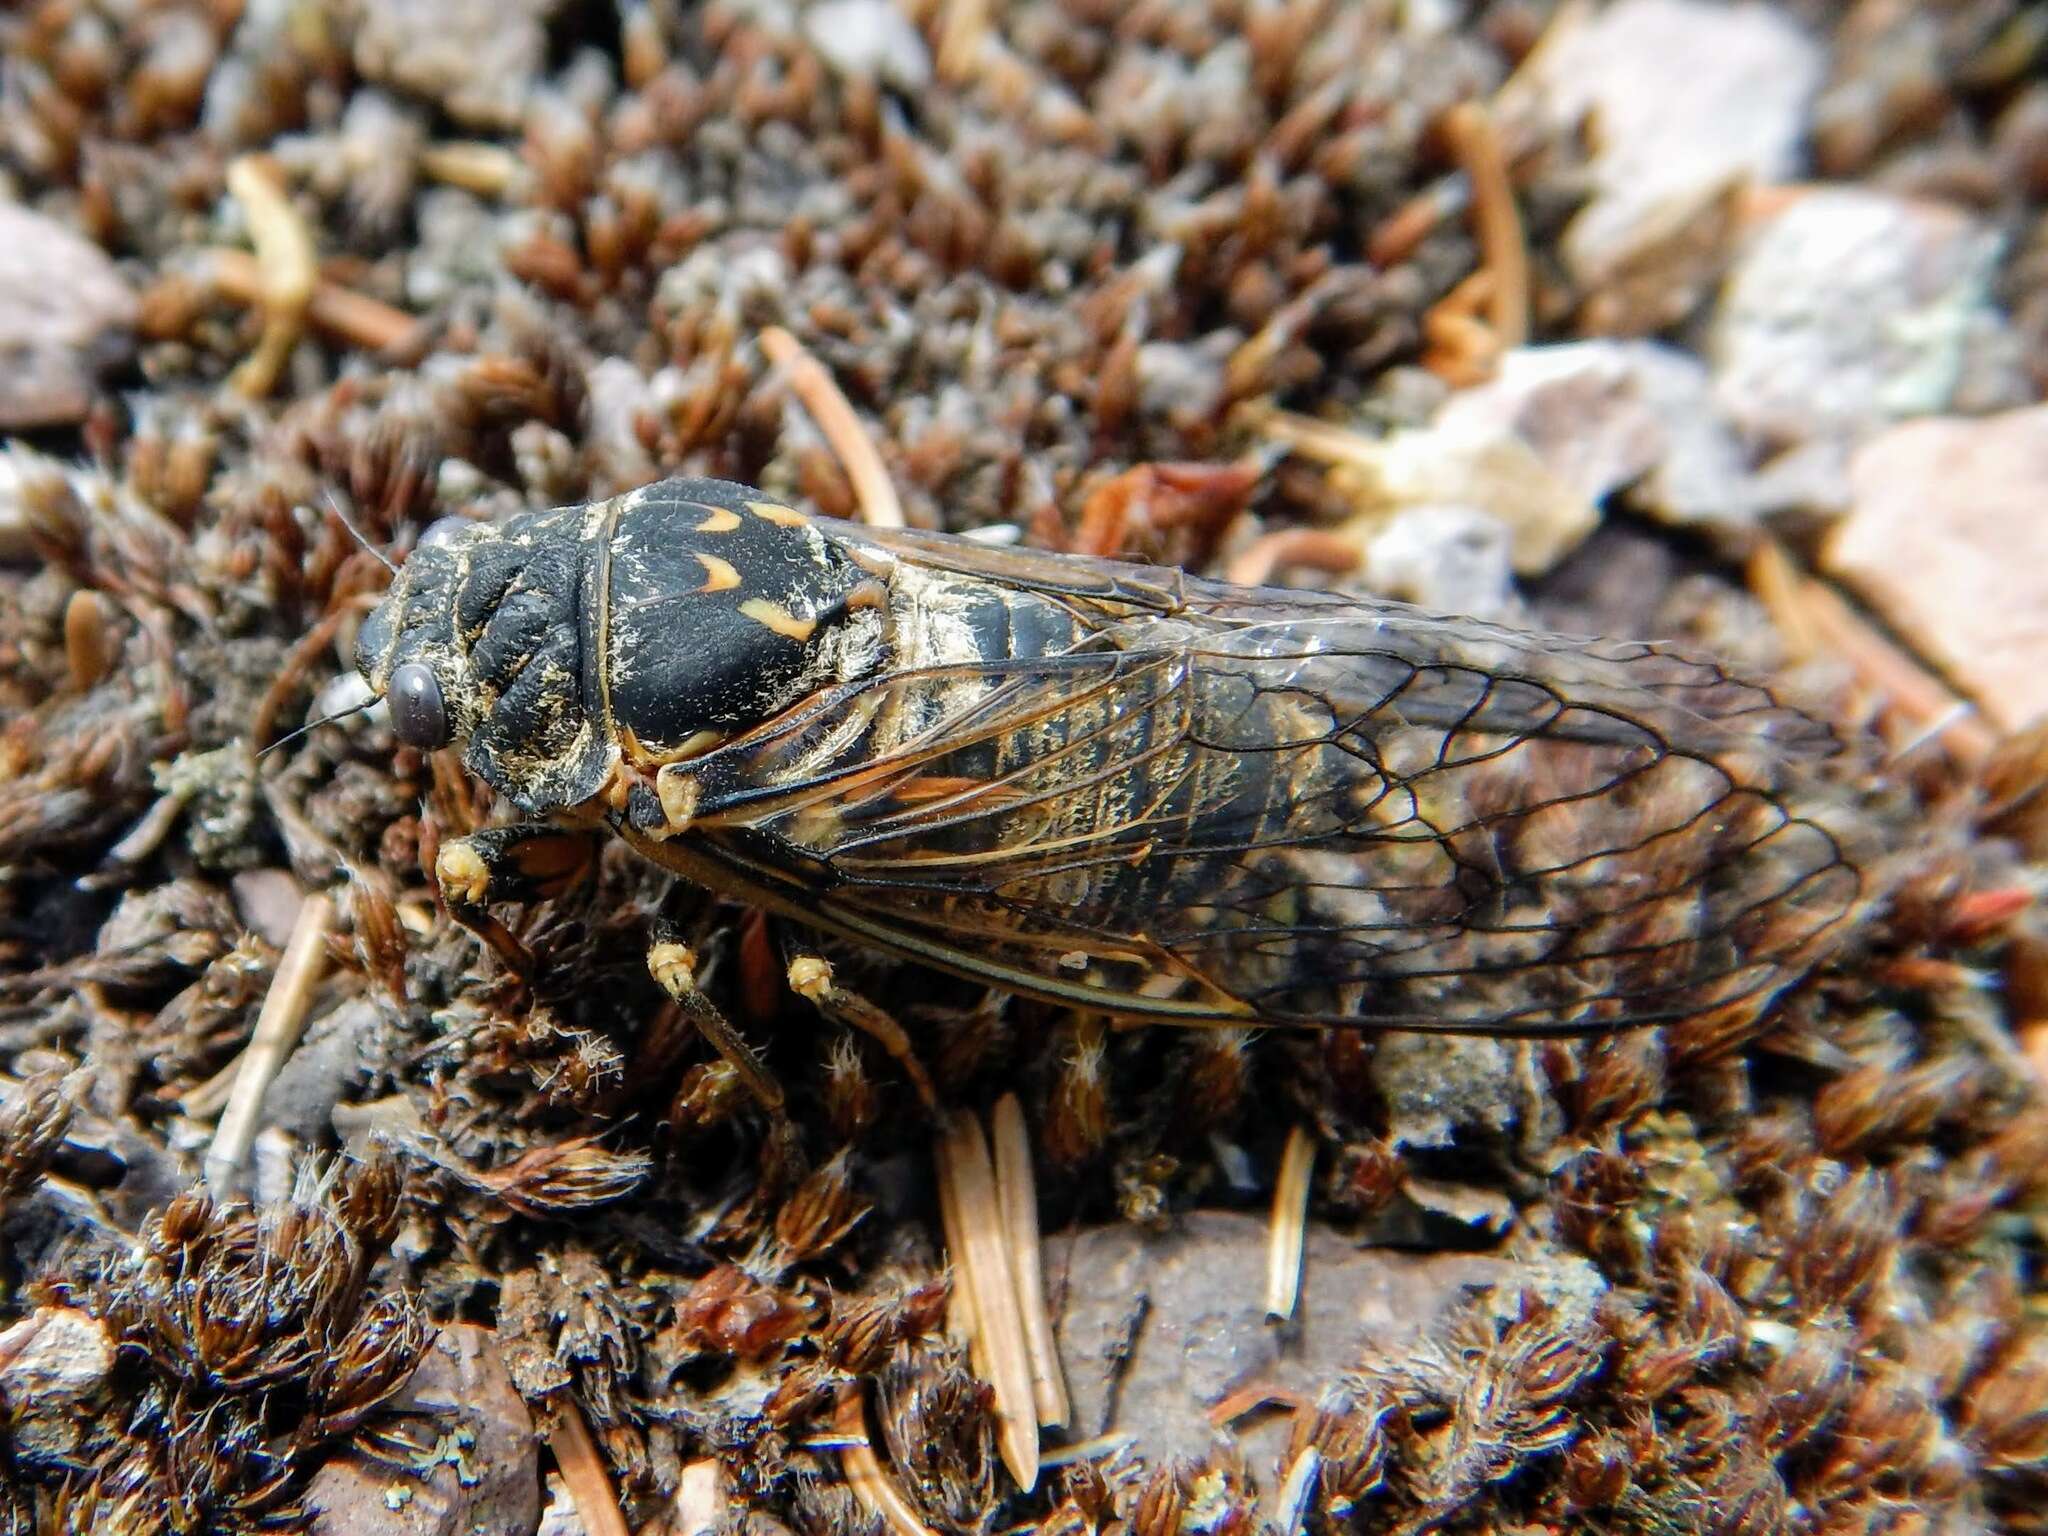 Image of Canadian Cicada